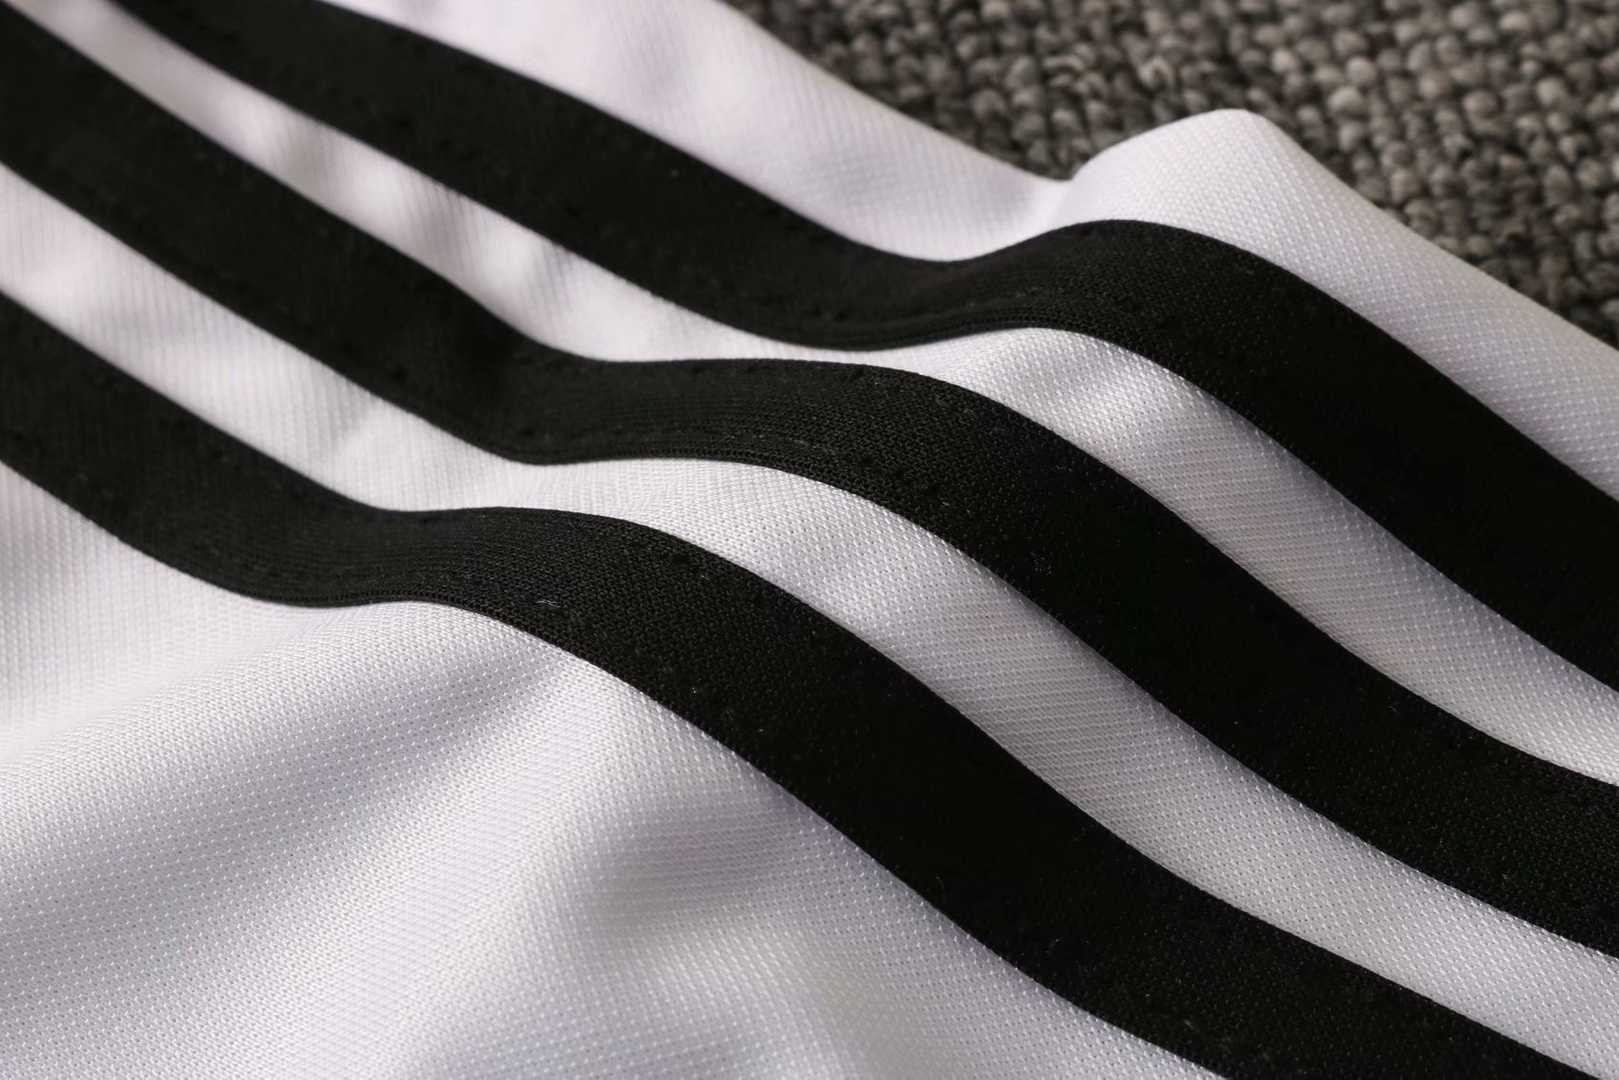 2019/20 Juventus x Palace White Mens Soccer Training Suit(Sweater + Pants)